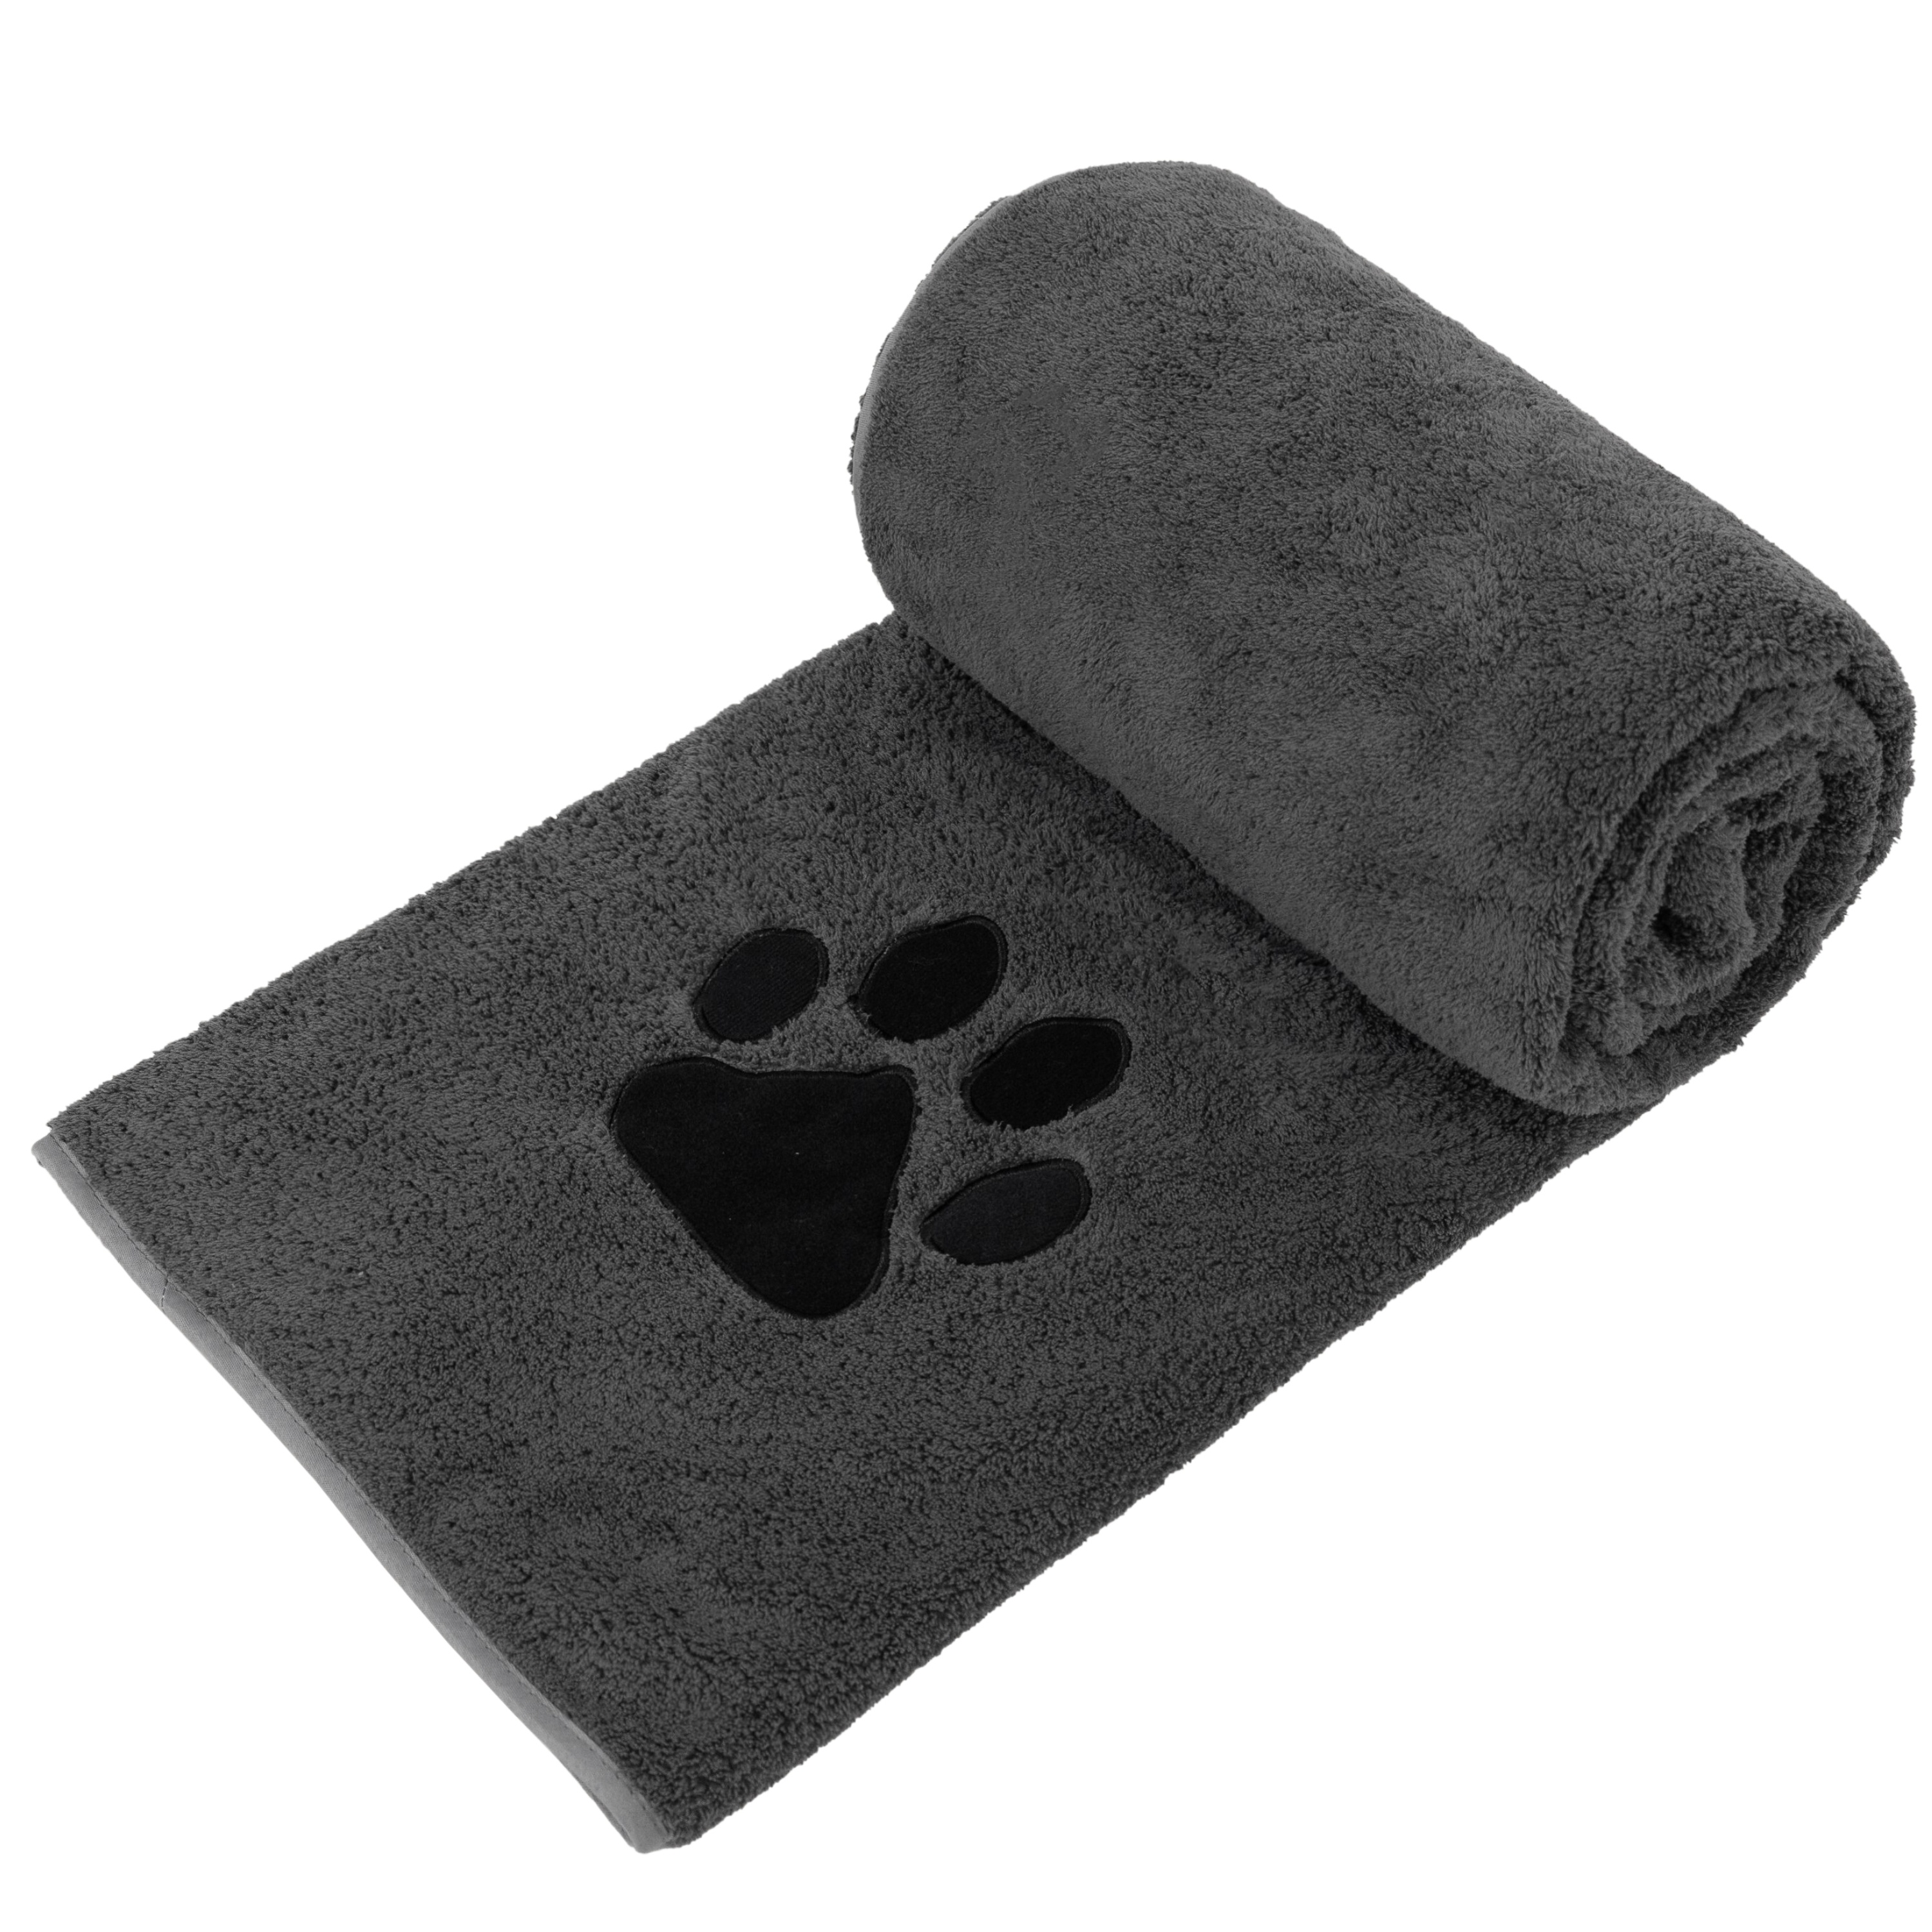 Perco ペット用タオル 大判 超吸水 ペットタオル 犬タオル 厚手 マイクロファイバー 犬 猫 体拭き (75cmx127cm)